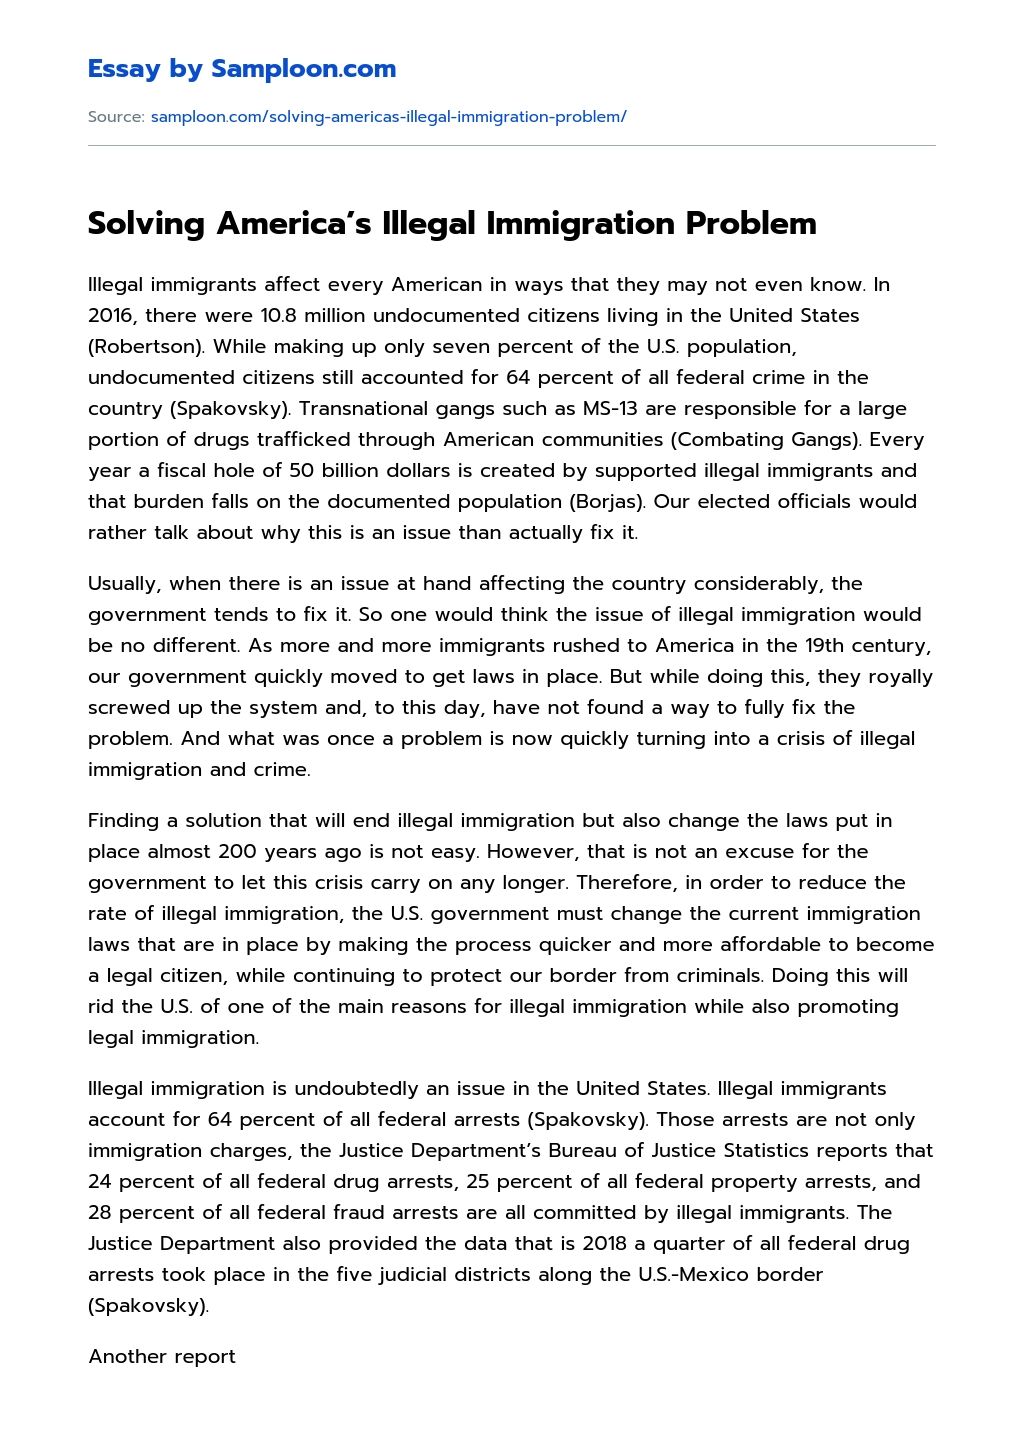 Solving America’s Illegal Immigration Problem essay